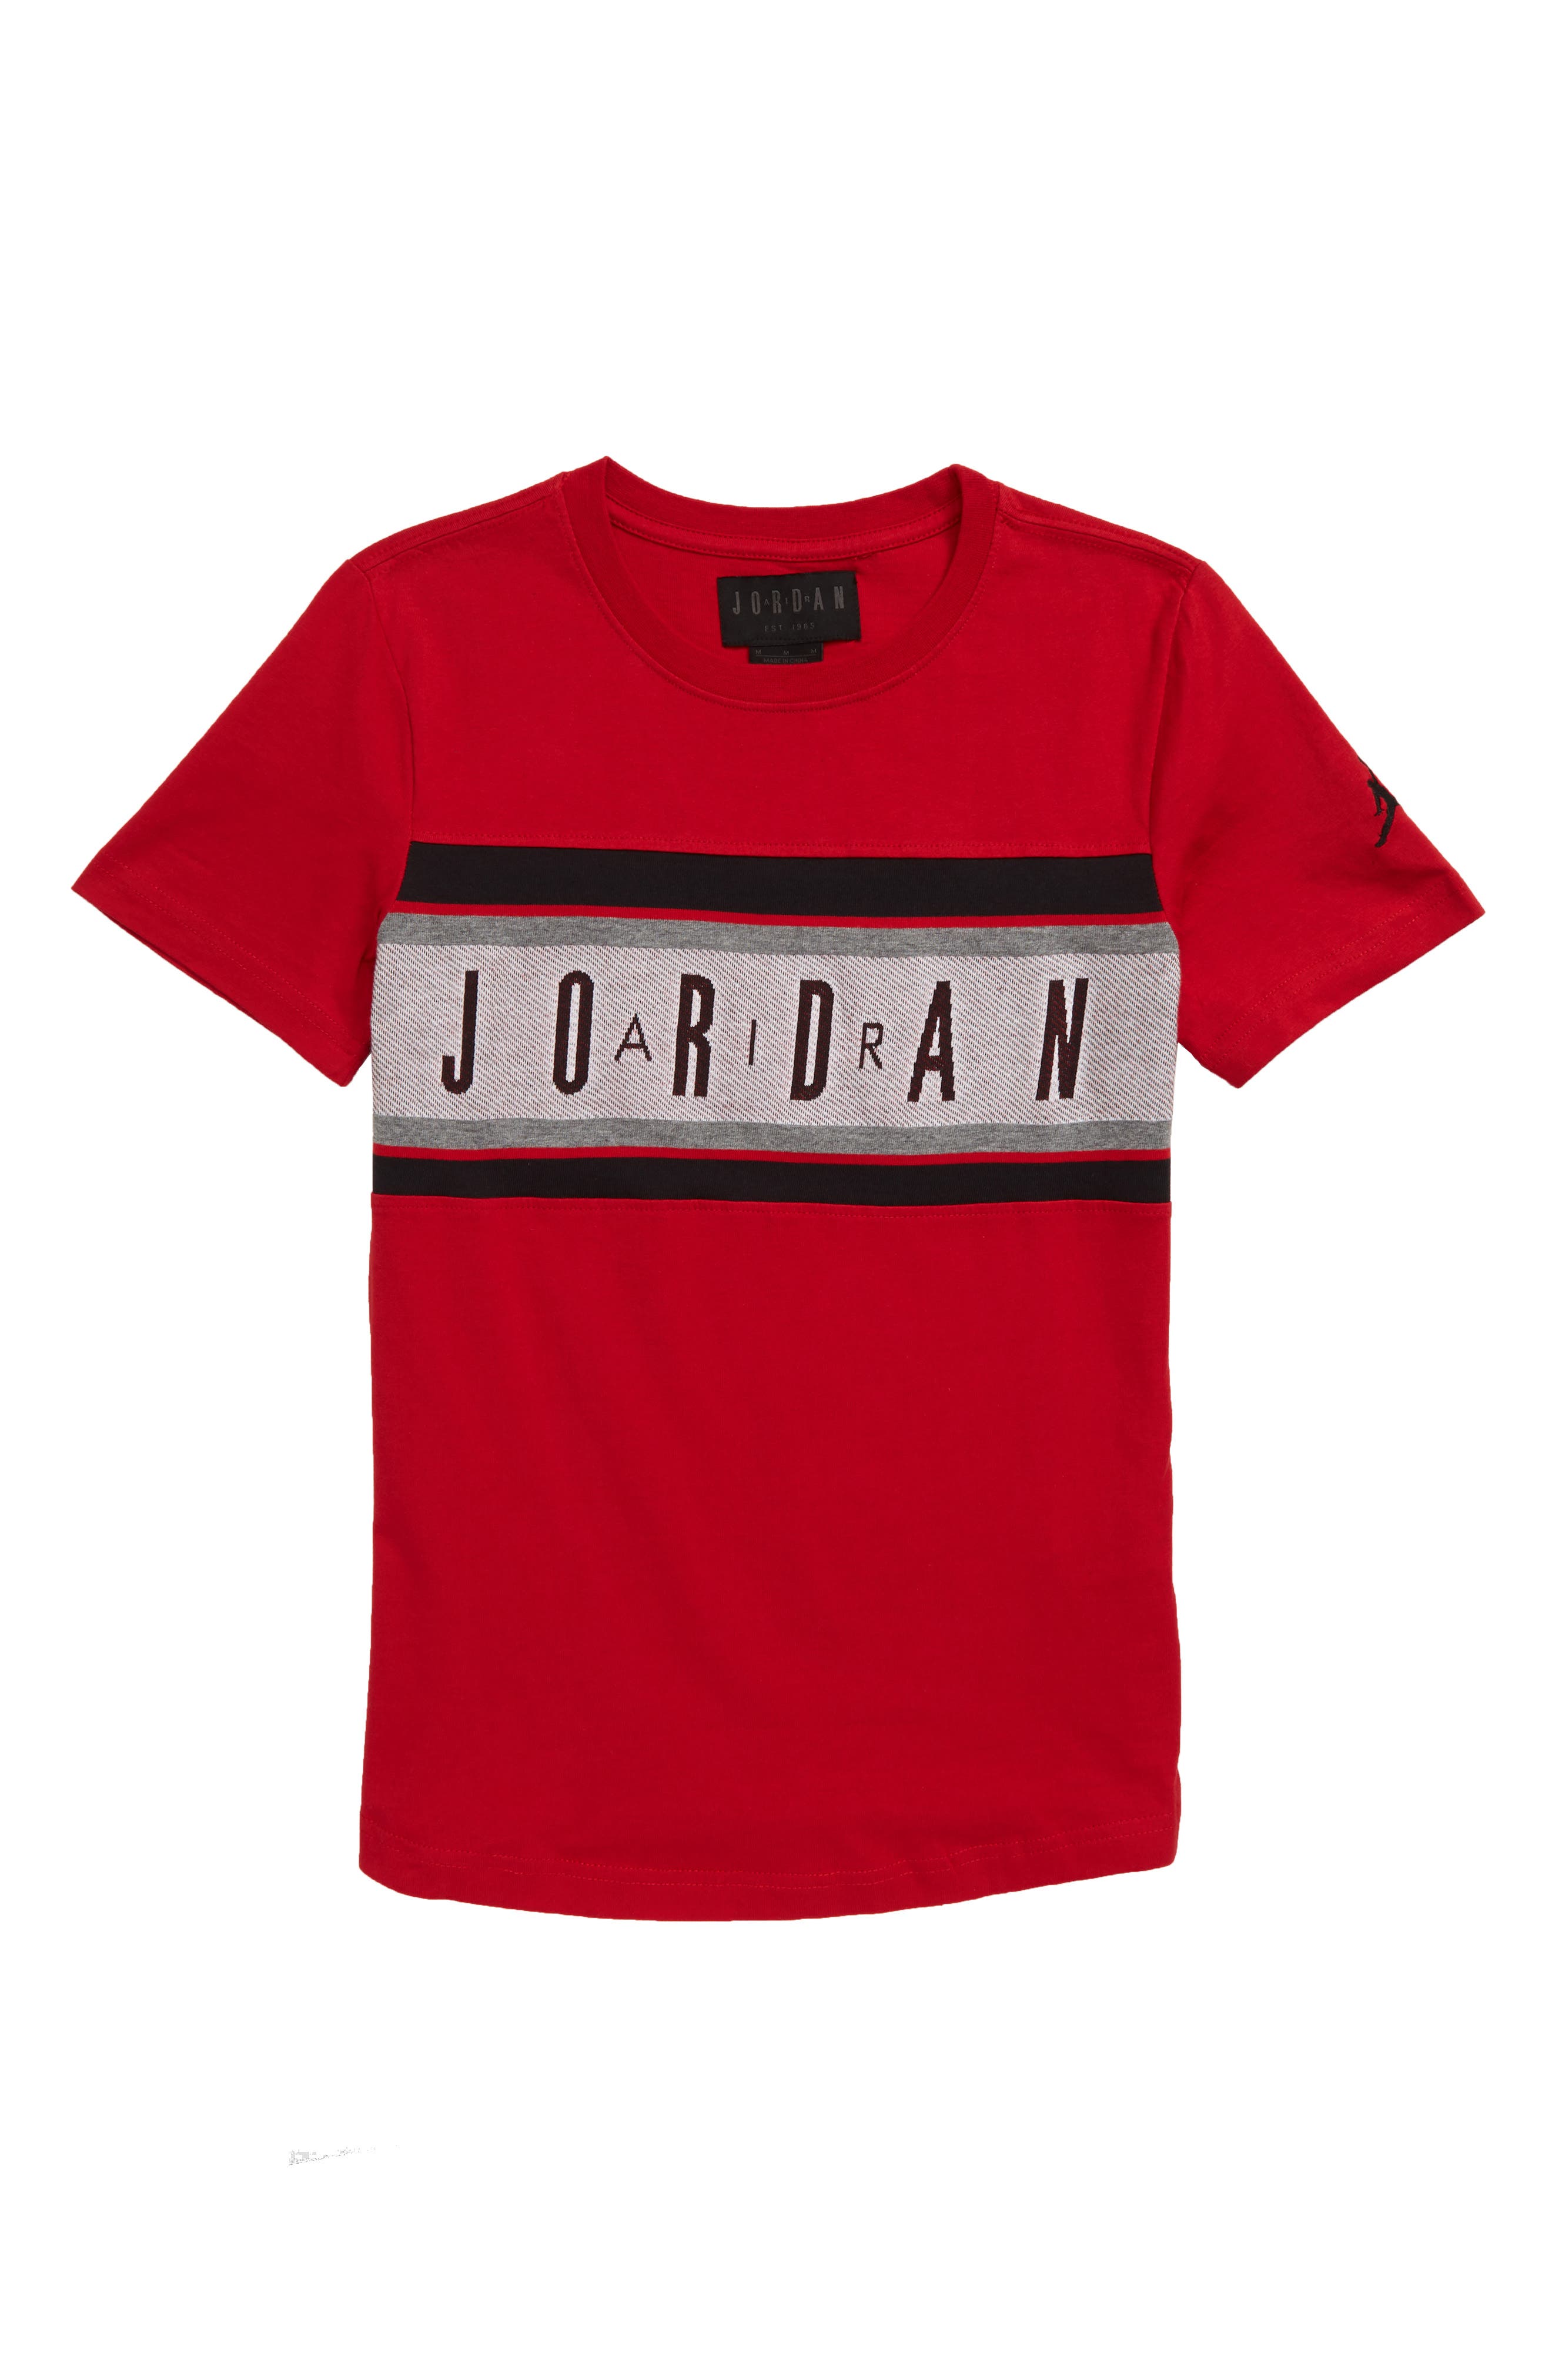 air jordan t shirt design